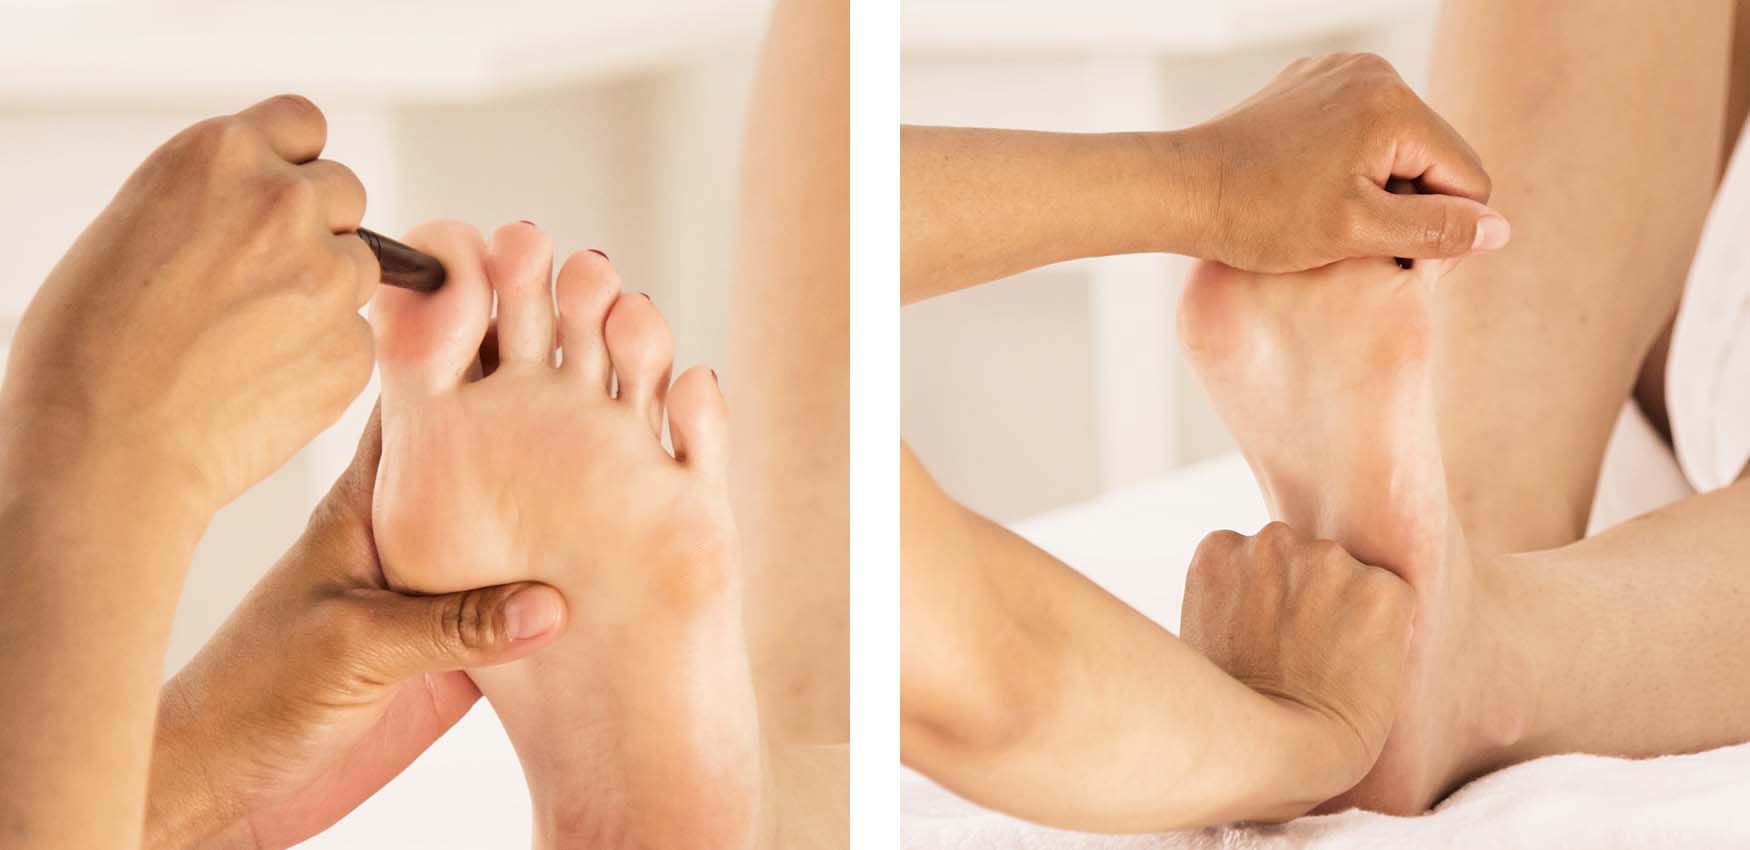 Foot massage in Bologna, Reflexology massage in Bologna, Reflexology, Thai foot reflexology, Thai foot massage